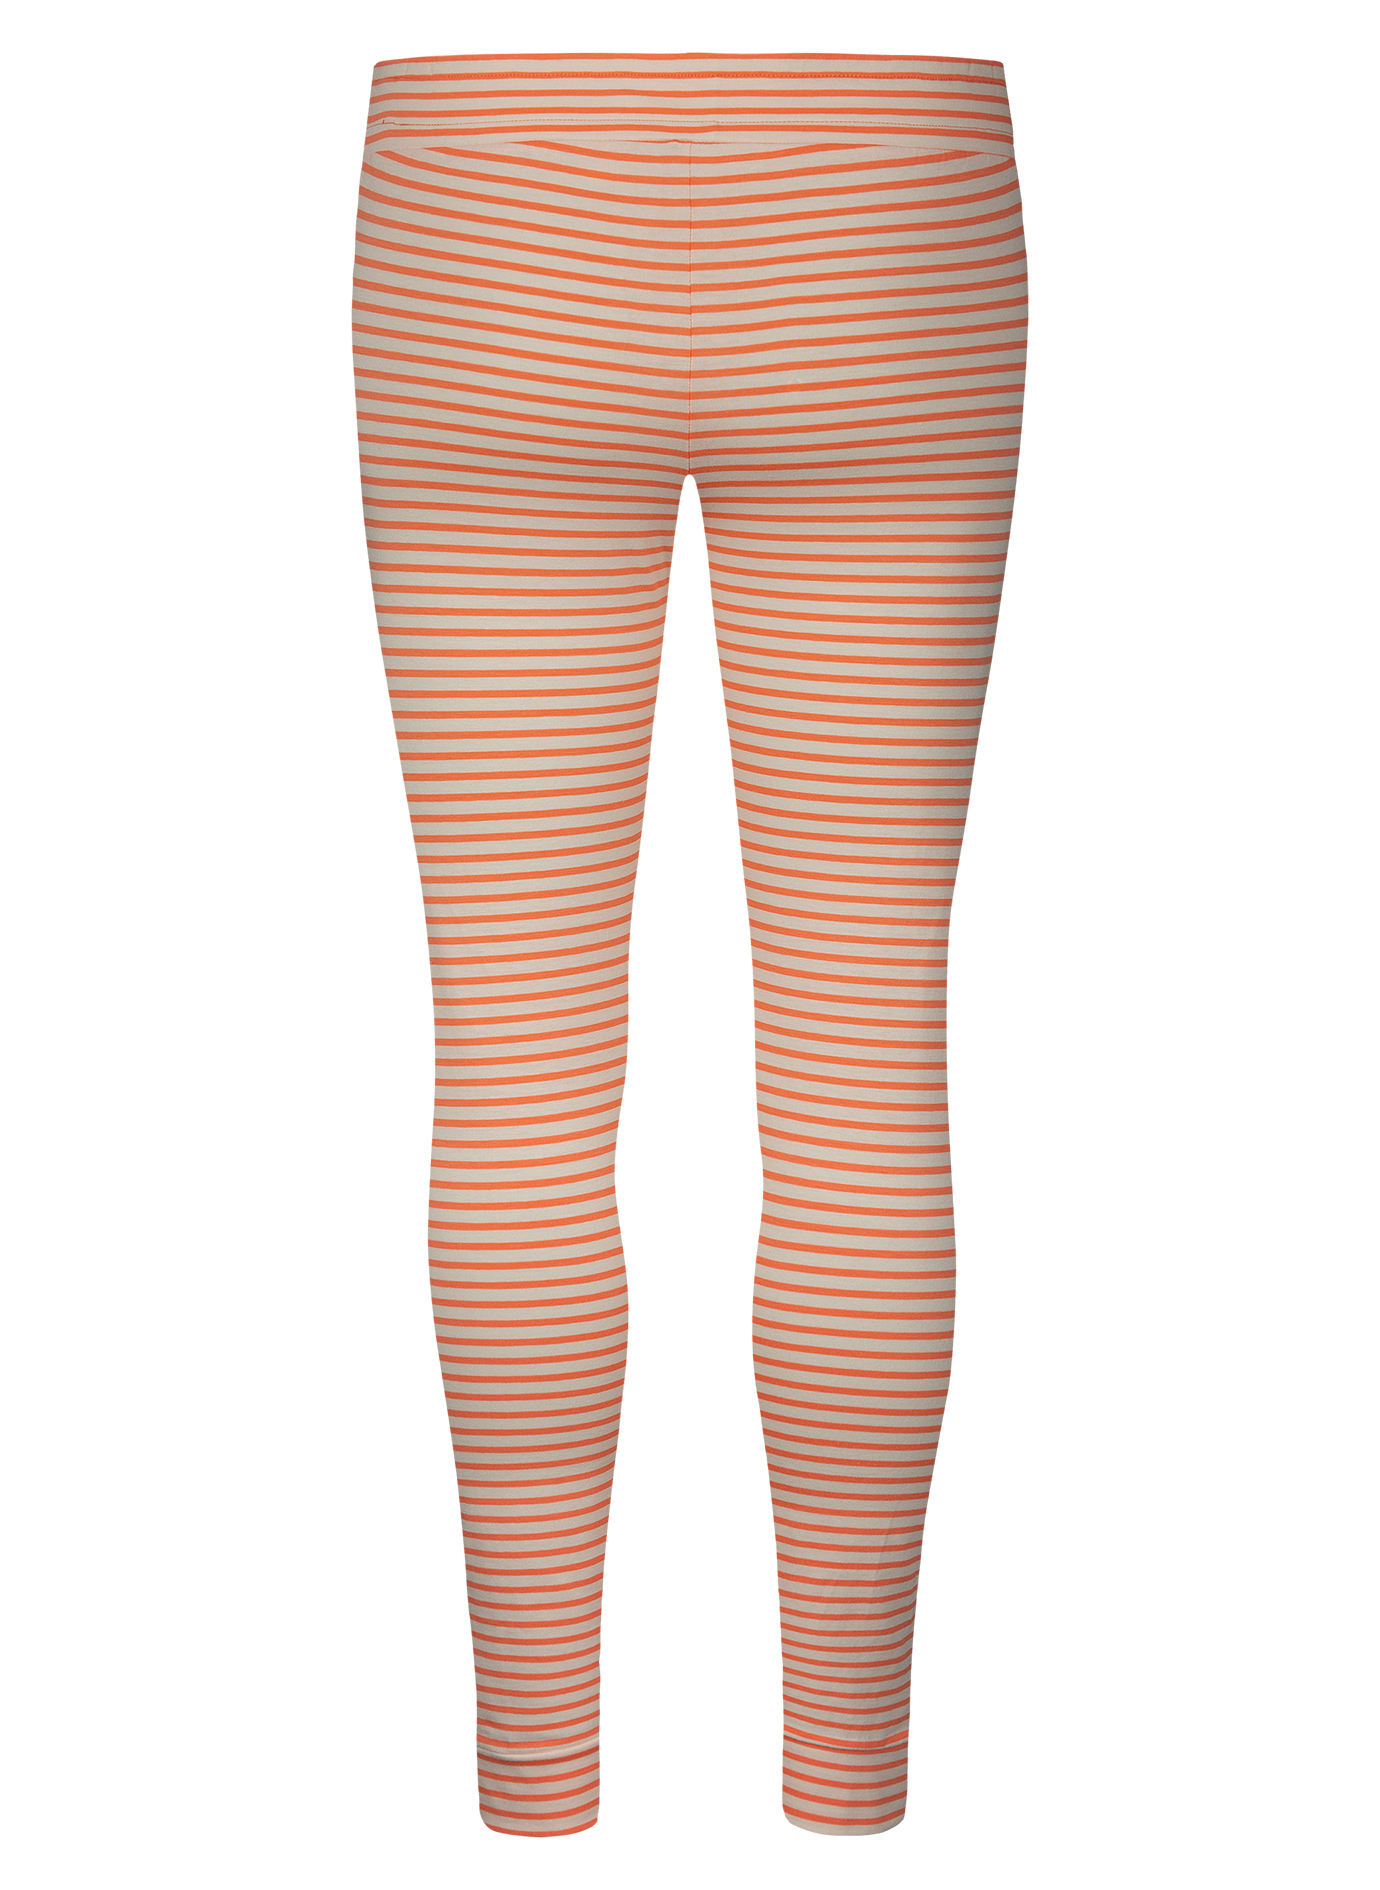 Damen-Leggings Orange Ringel